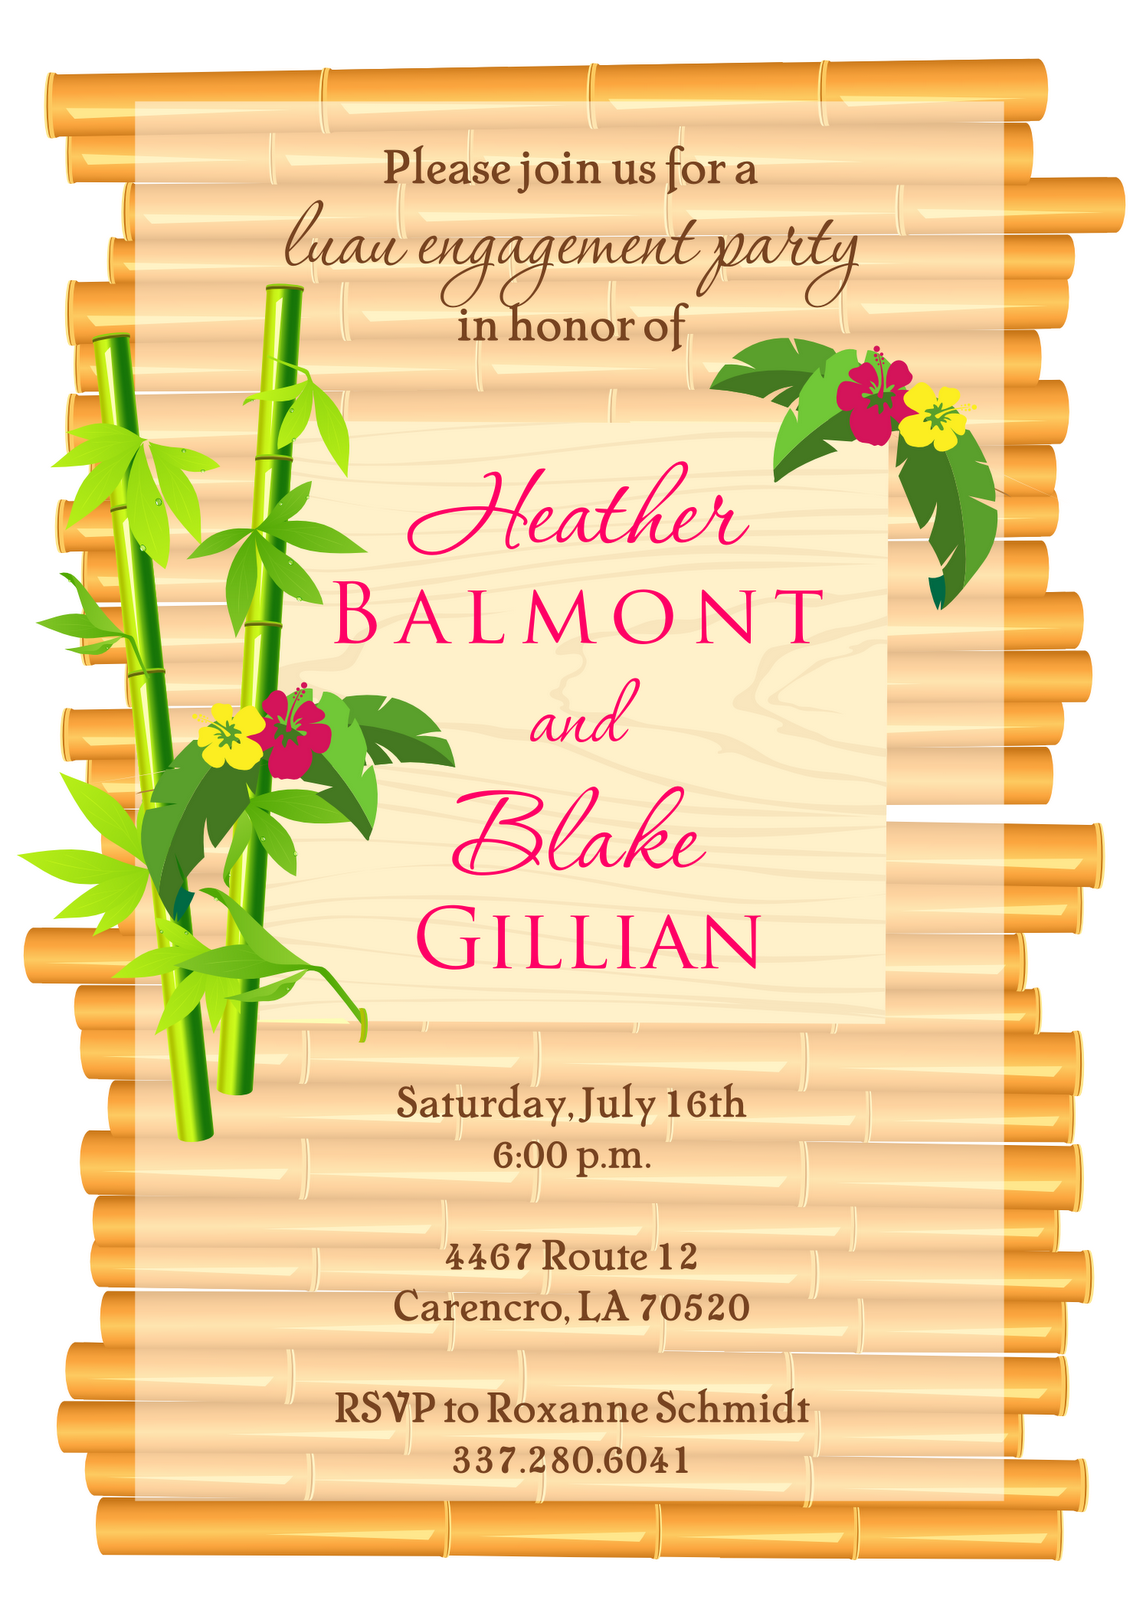 Bamboo clipart hawaiian. Invitation of engagement party